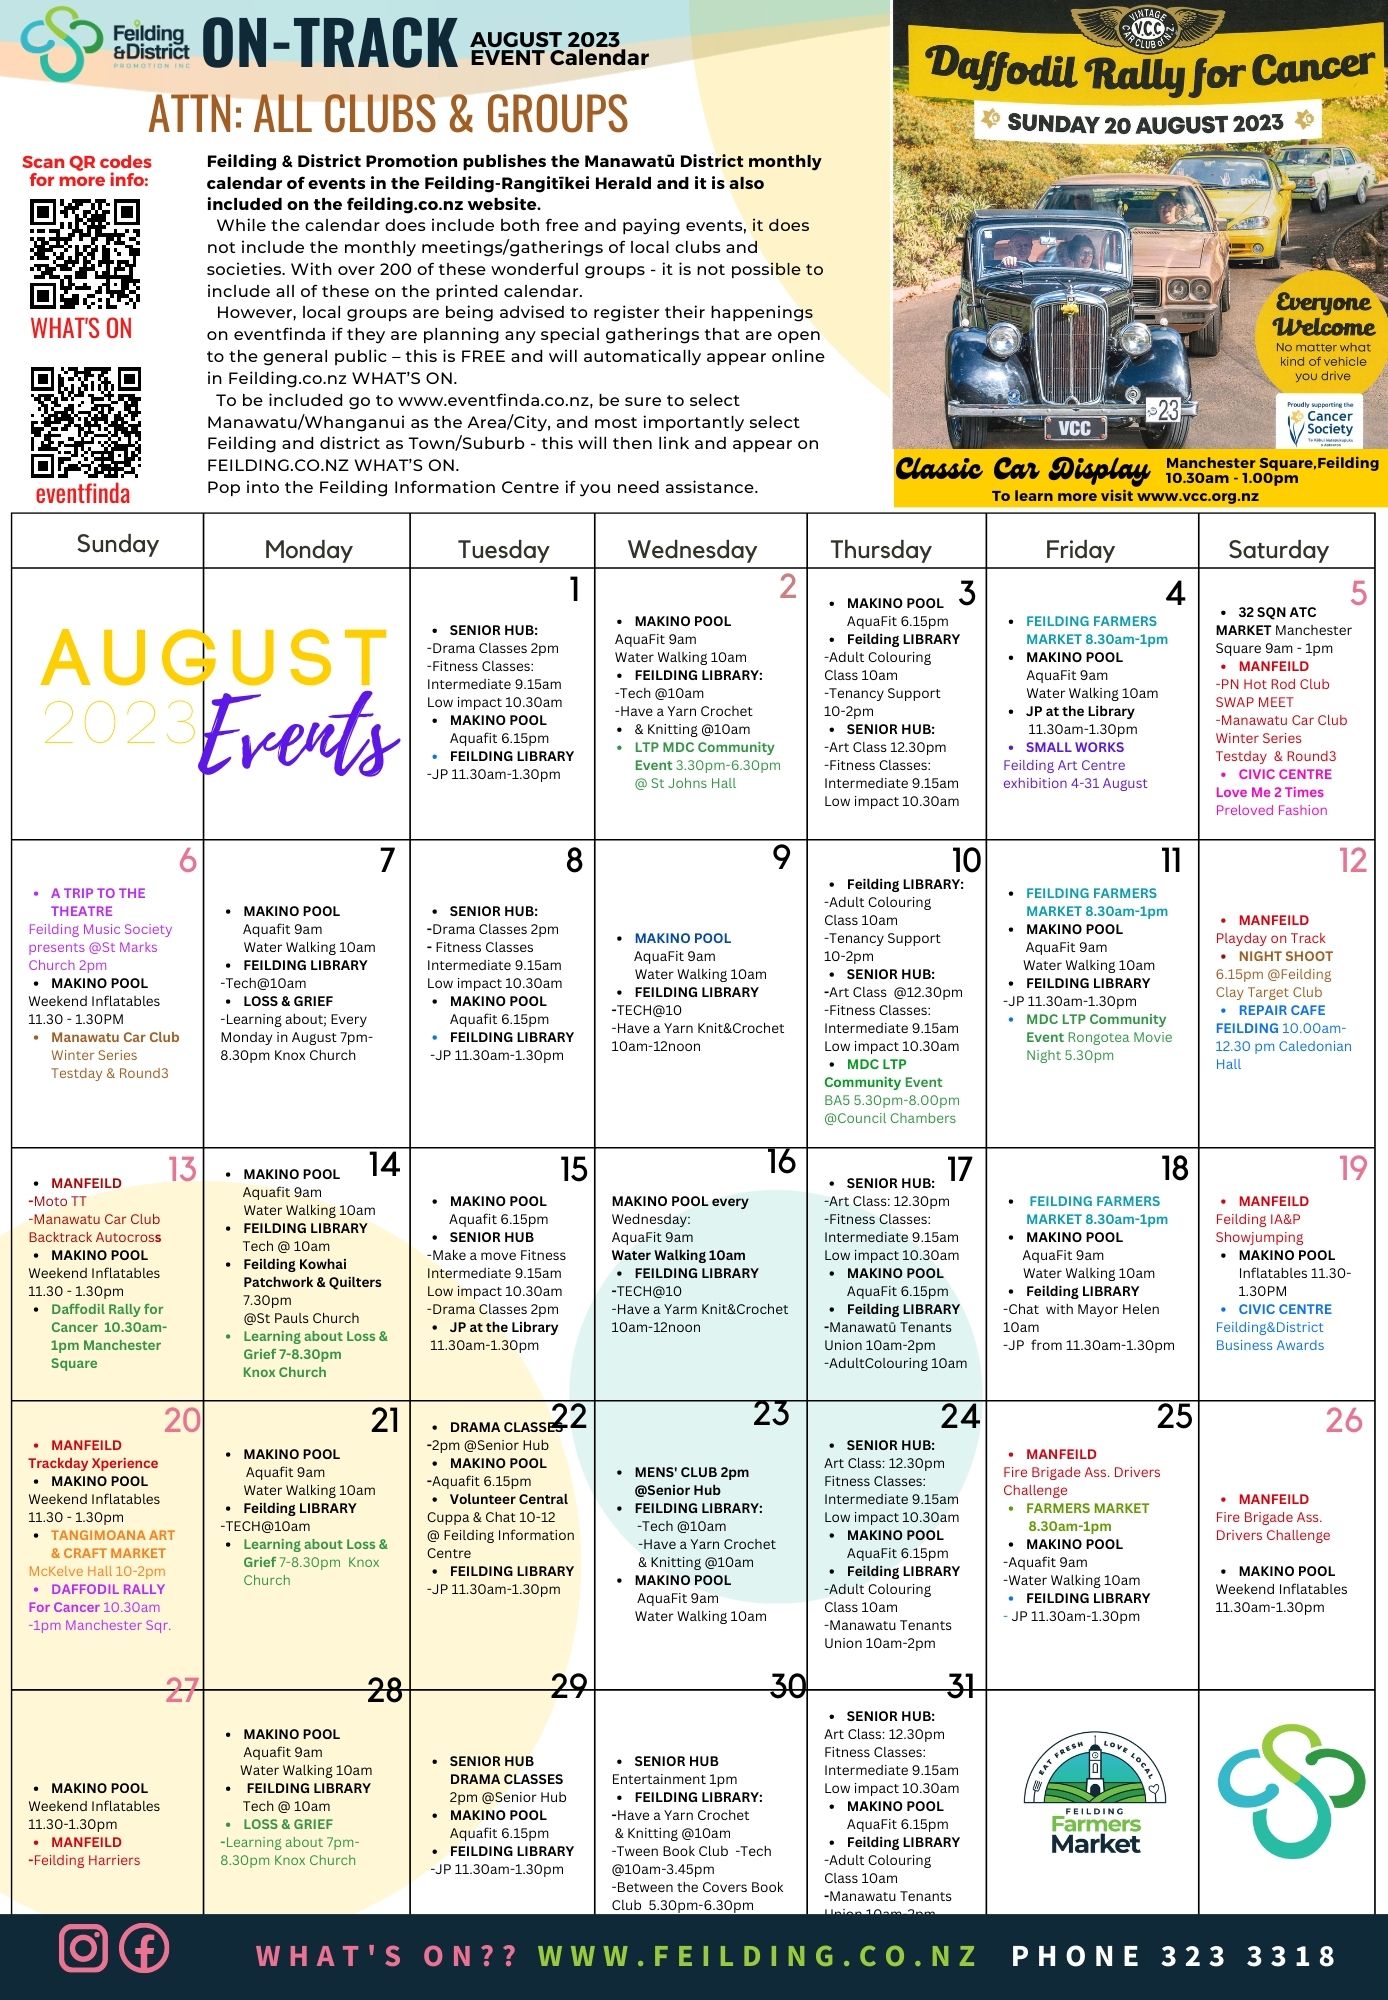 Feilding Manawatu August Event Calendar